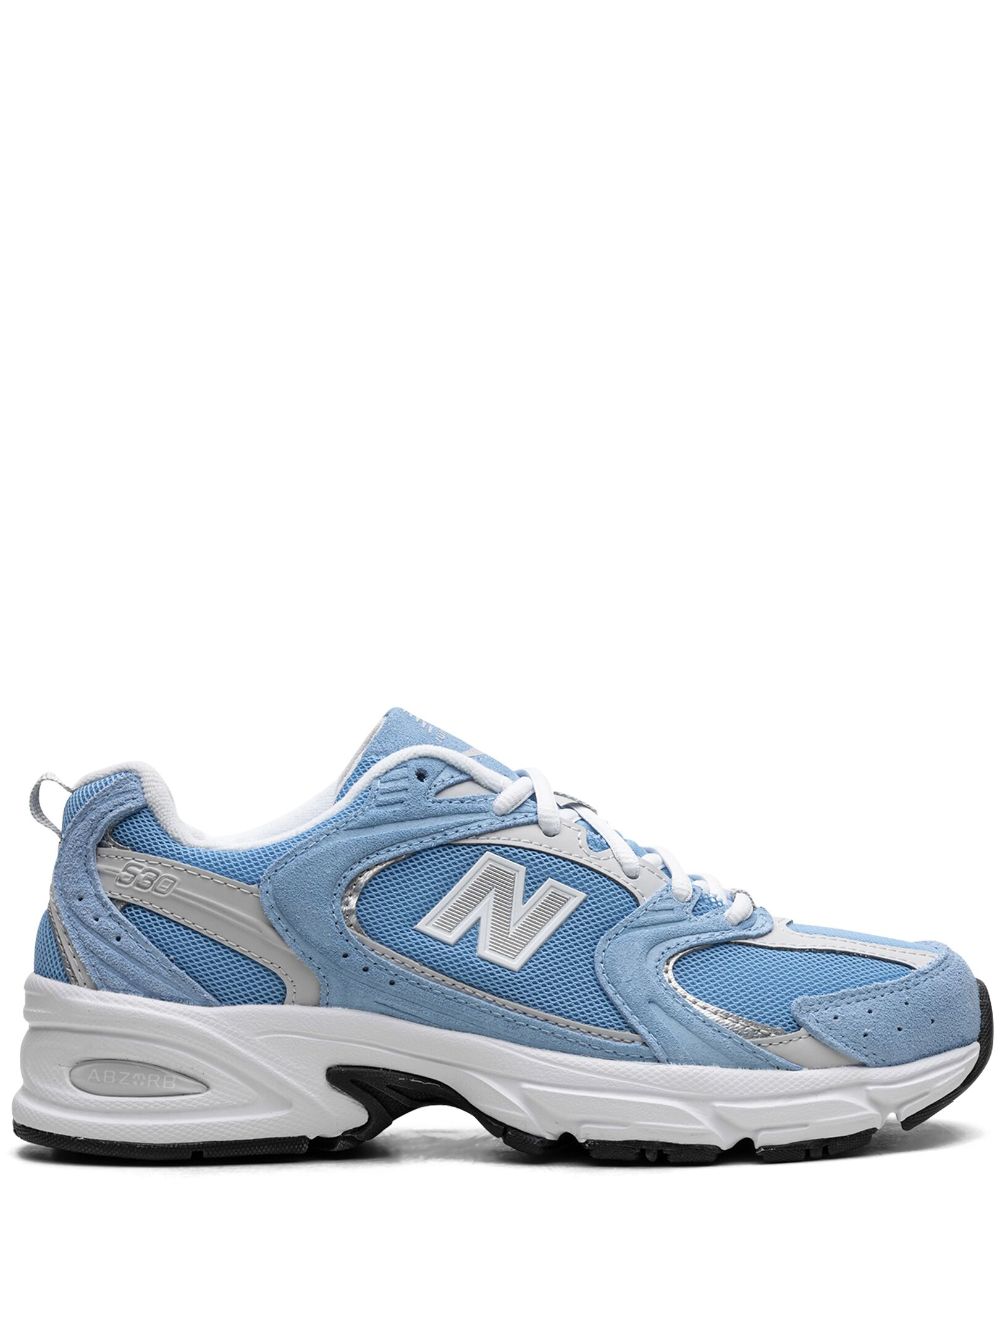 New Balance 530 Blue Haze Sneakers - Blau von New Balance